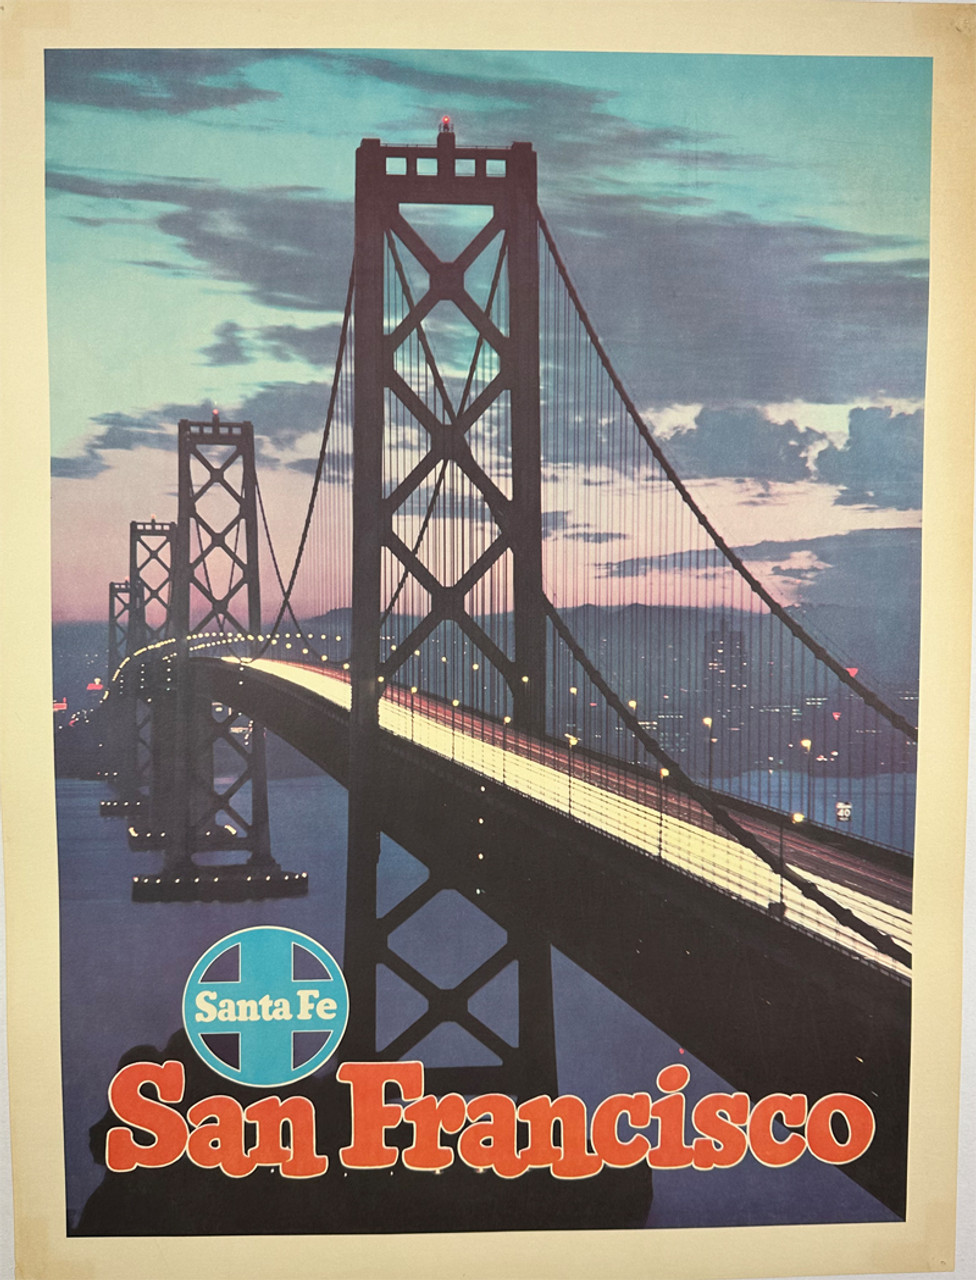 San Francisco Santa Fe Railroad by Don Perceval ca 1950s original lithograph on linen vintage poster